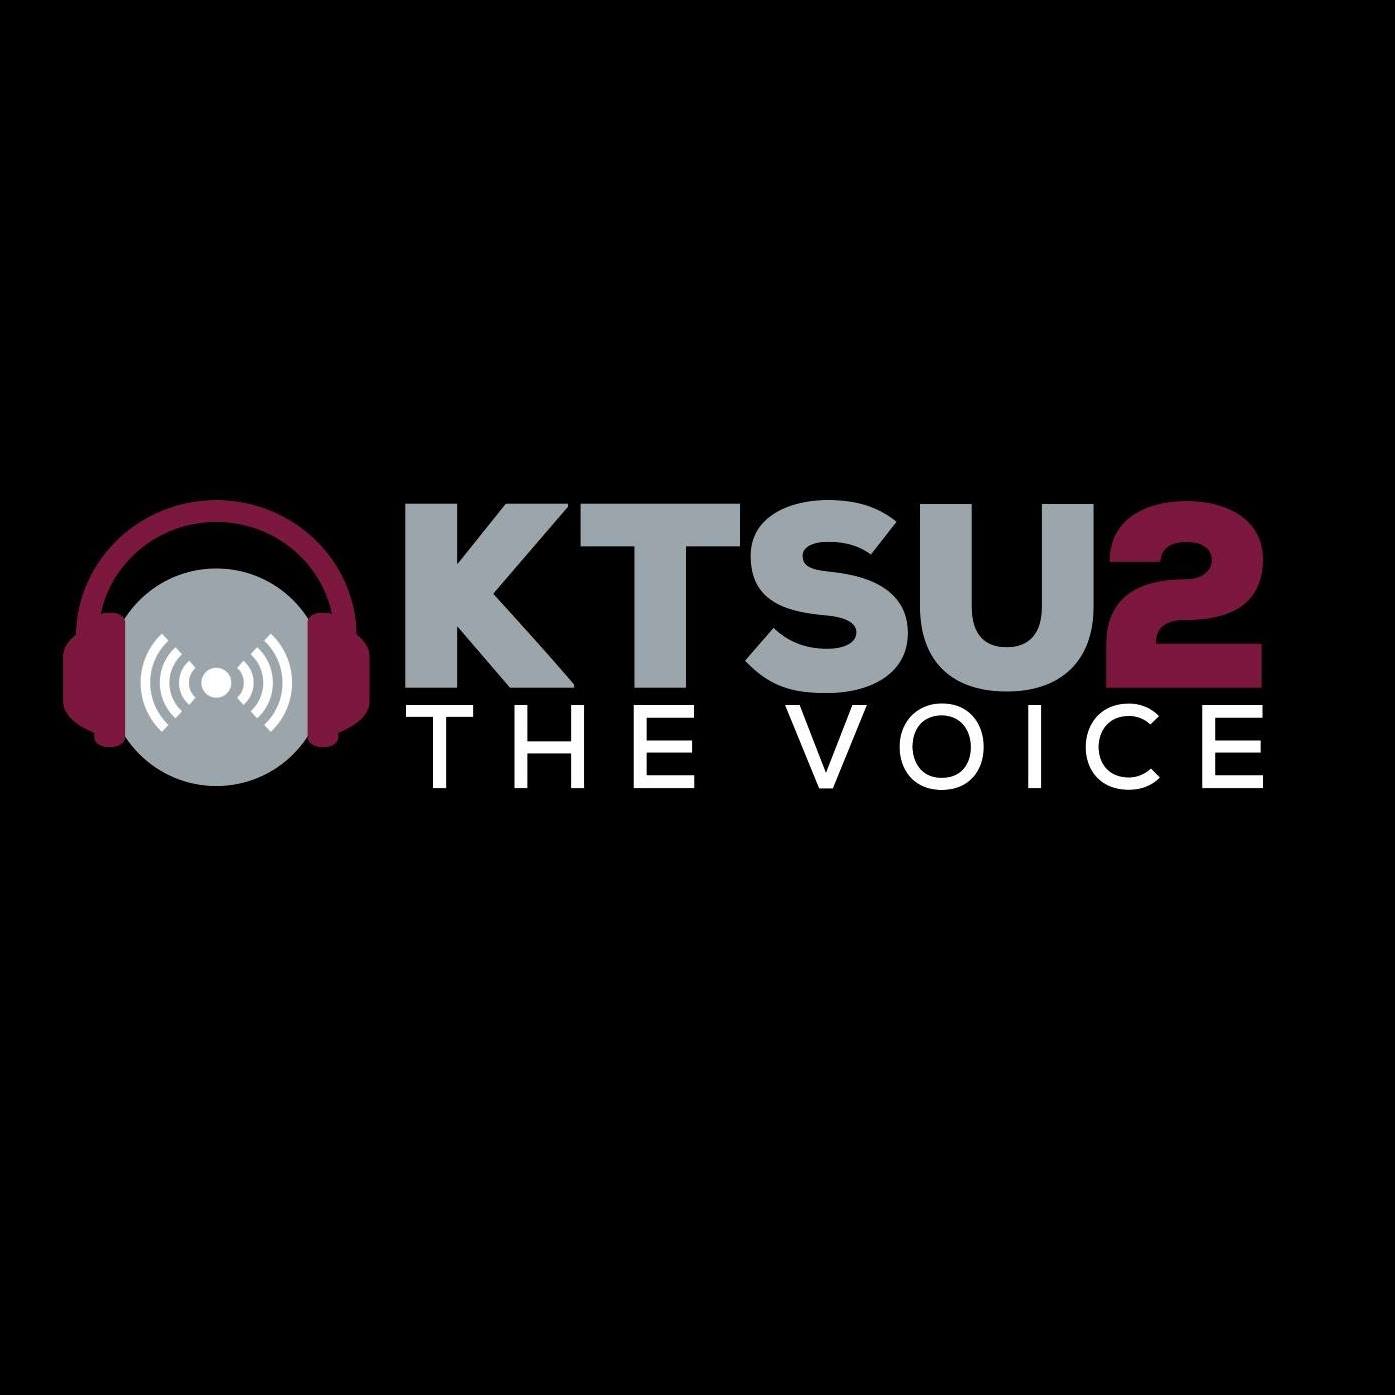 KTSU2 The Voice